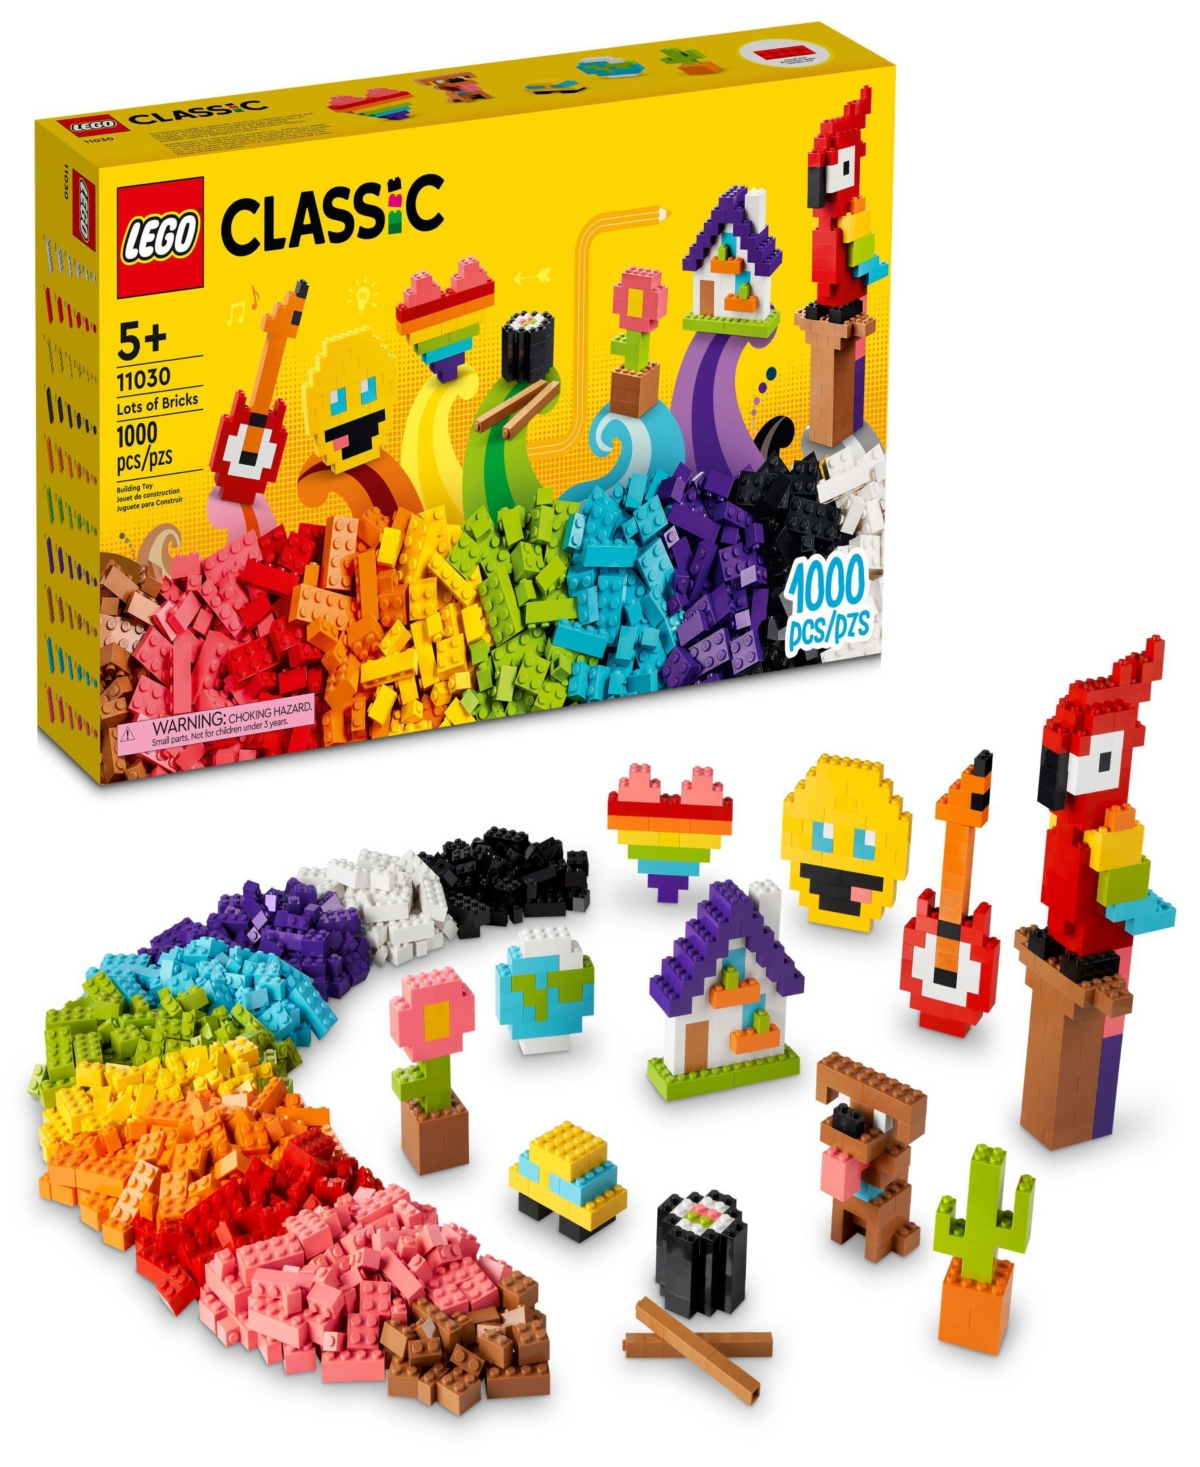 Lego Classic 11030 Lots Of Bricks Toy Assortment Block Building Set In Multicolor